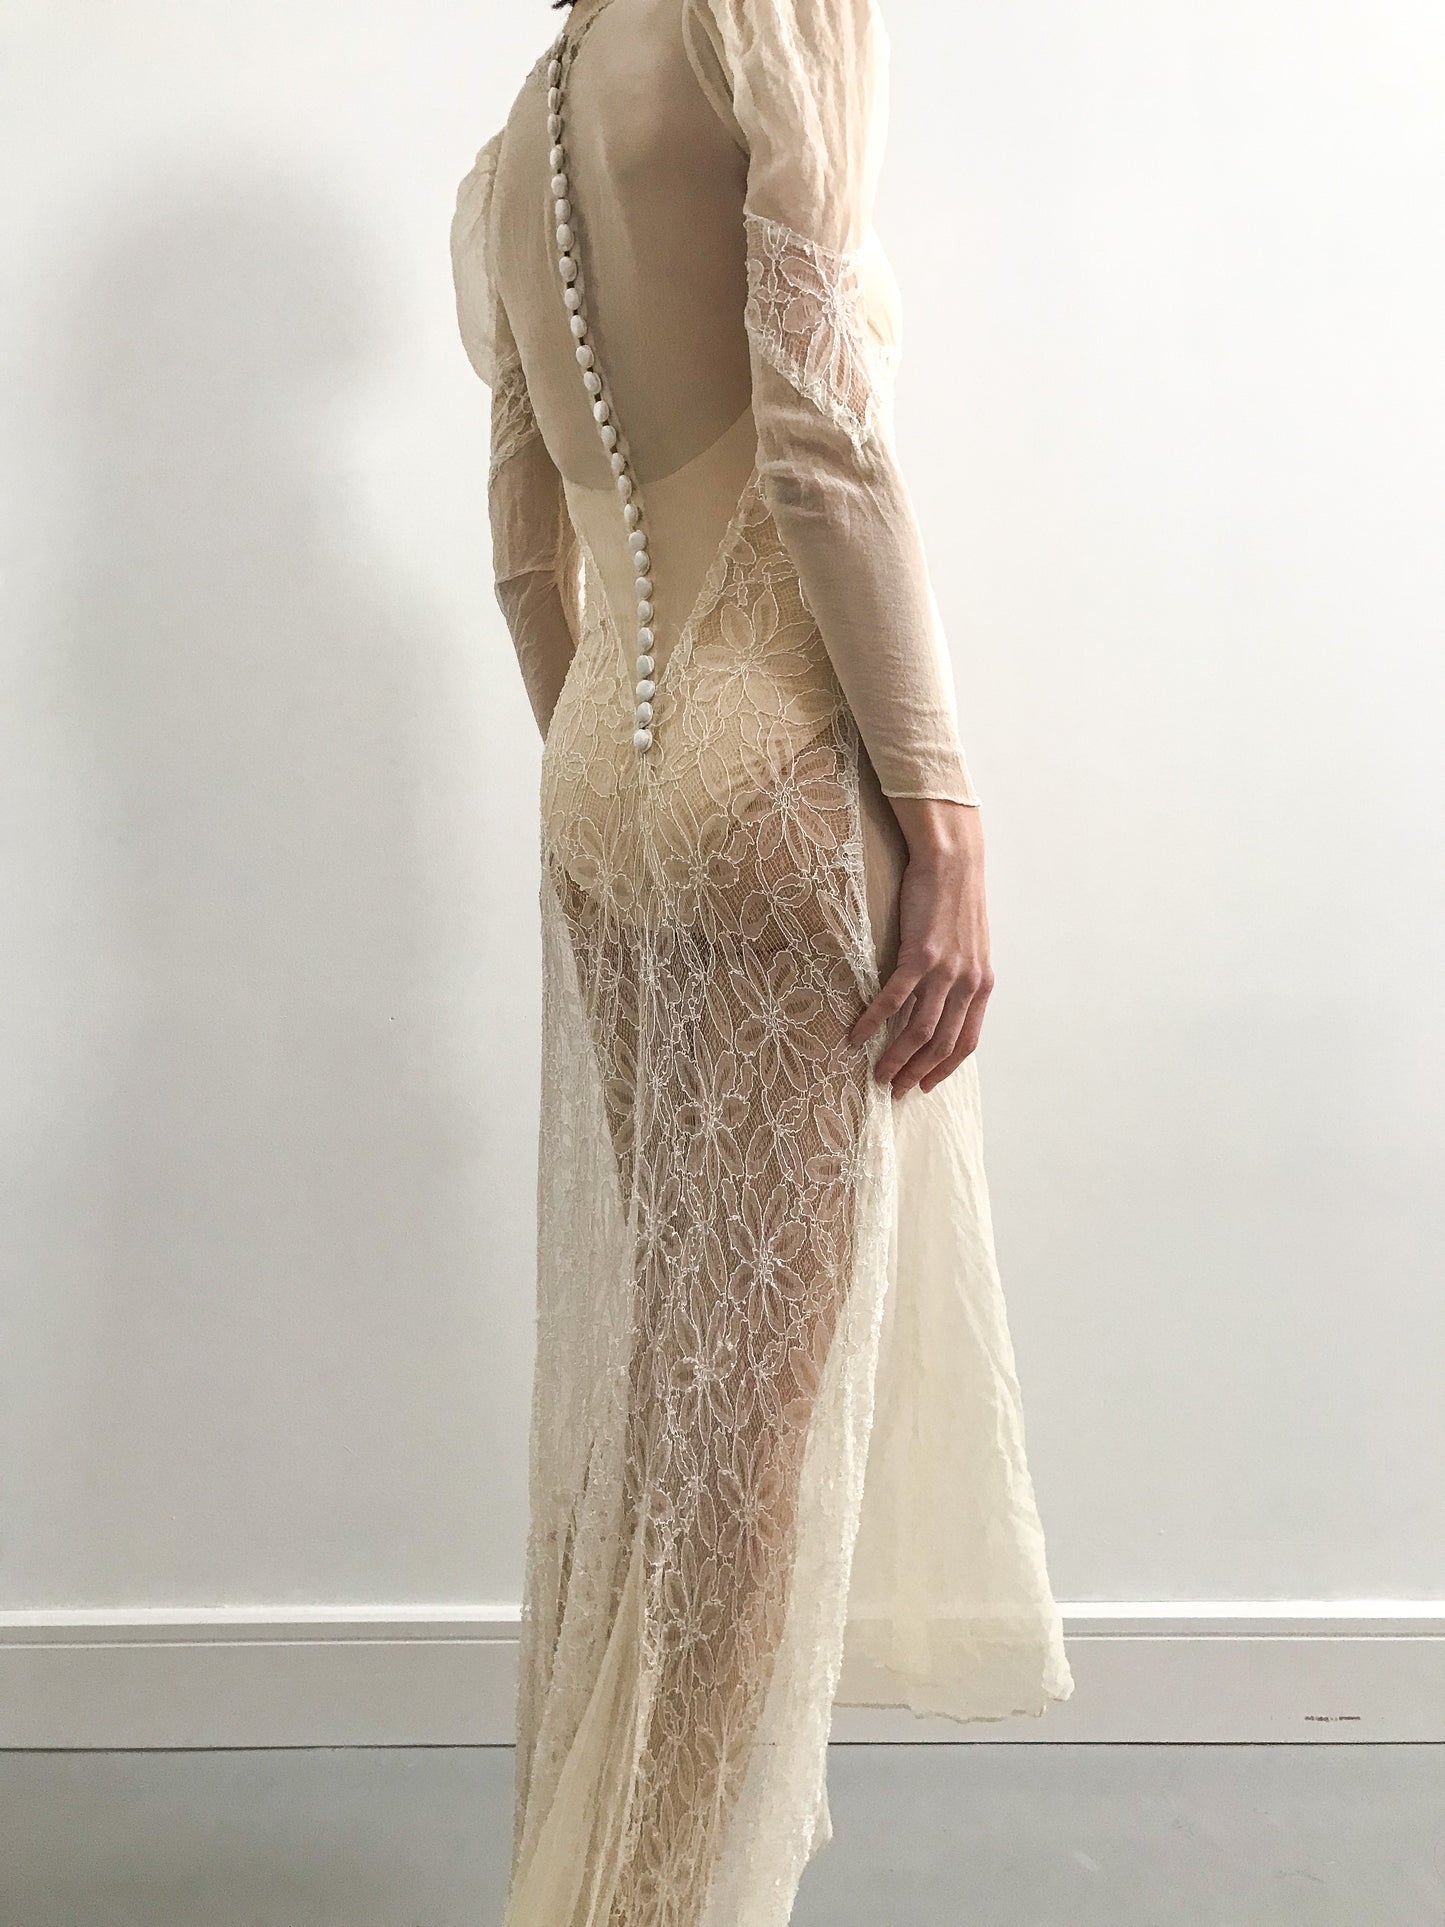 1940s Sheer Chiffon Lace Wedding Dress